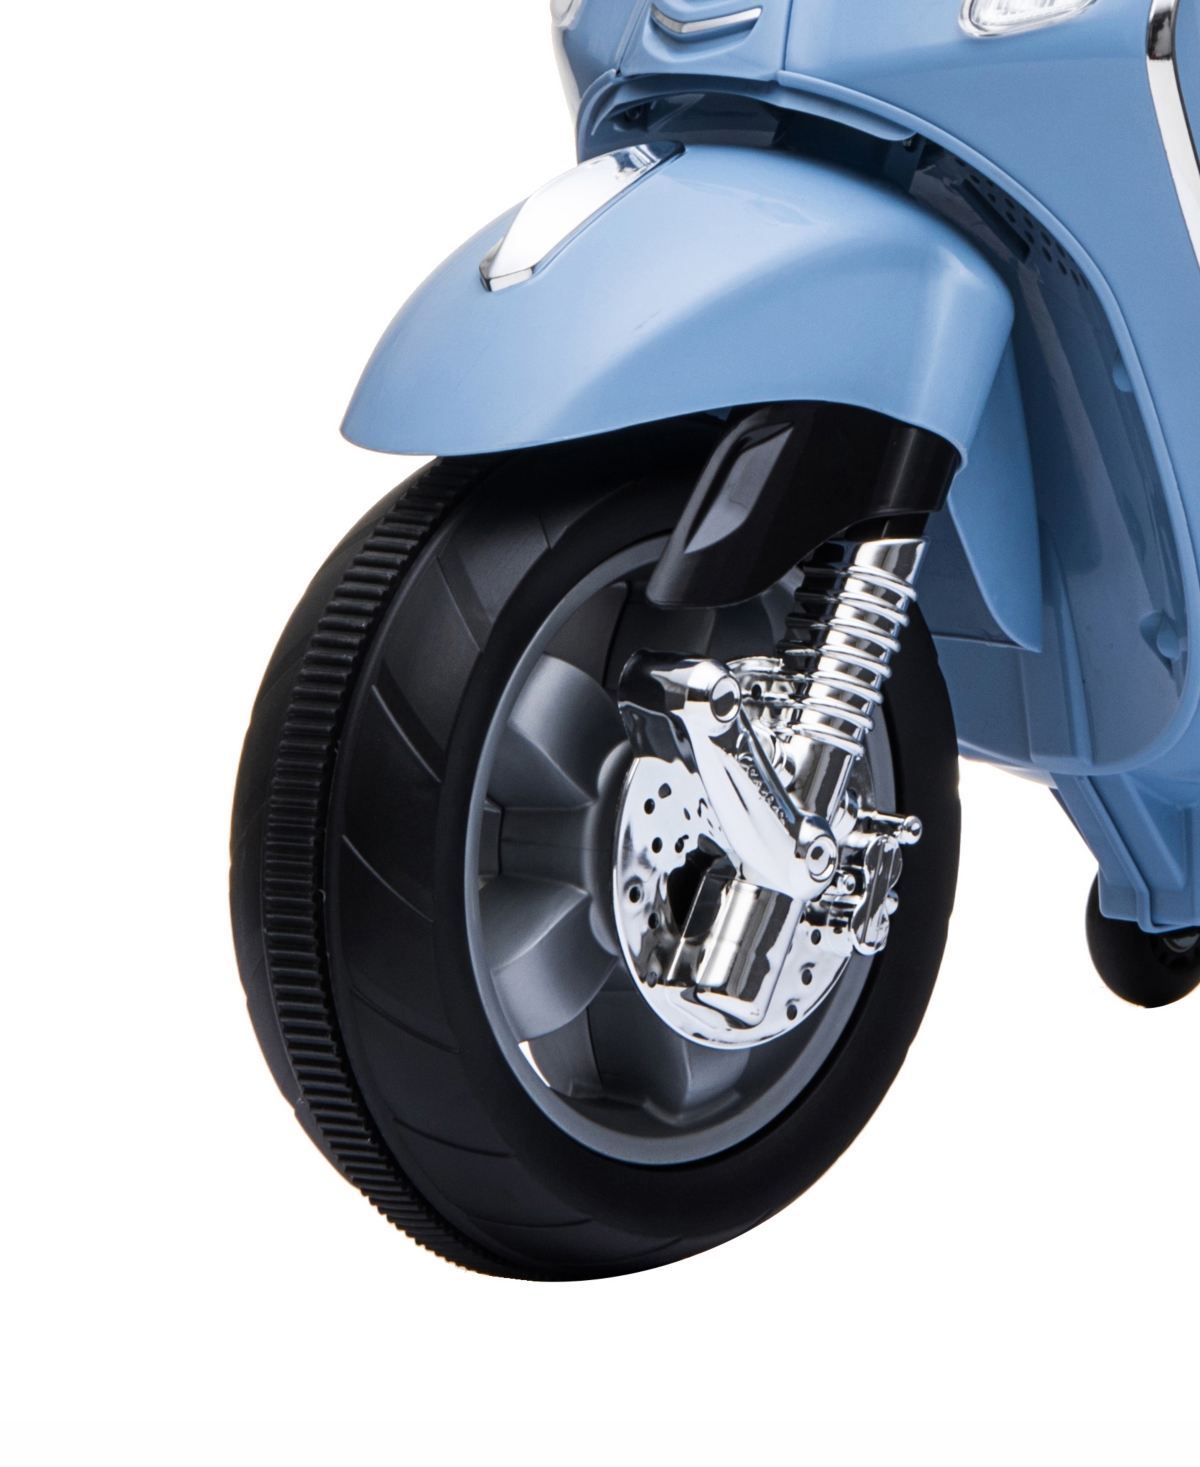 Shop Blazin' Wheels Blazin Wheels 801bl 12v Vespa Gts Super Sport Blue Scooter